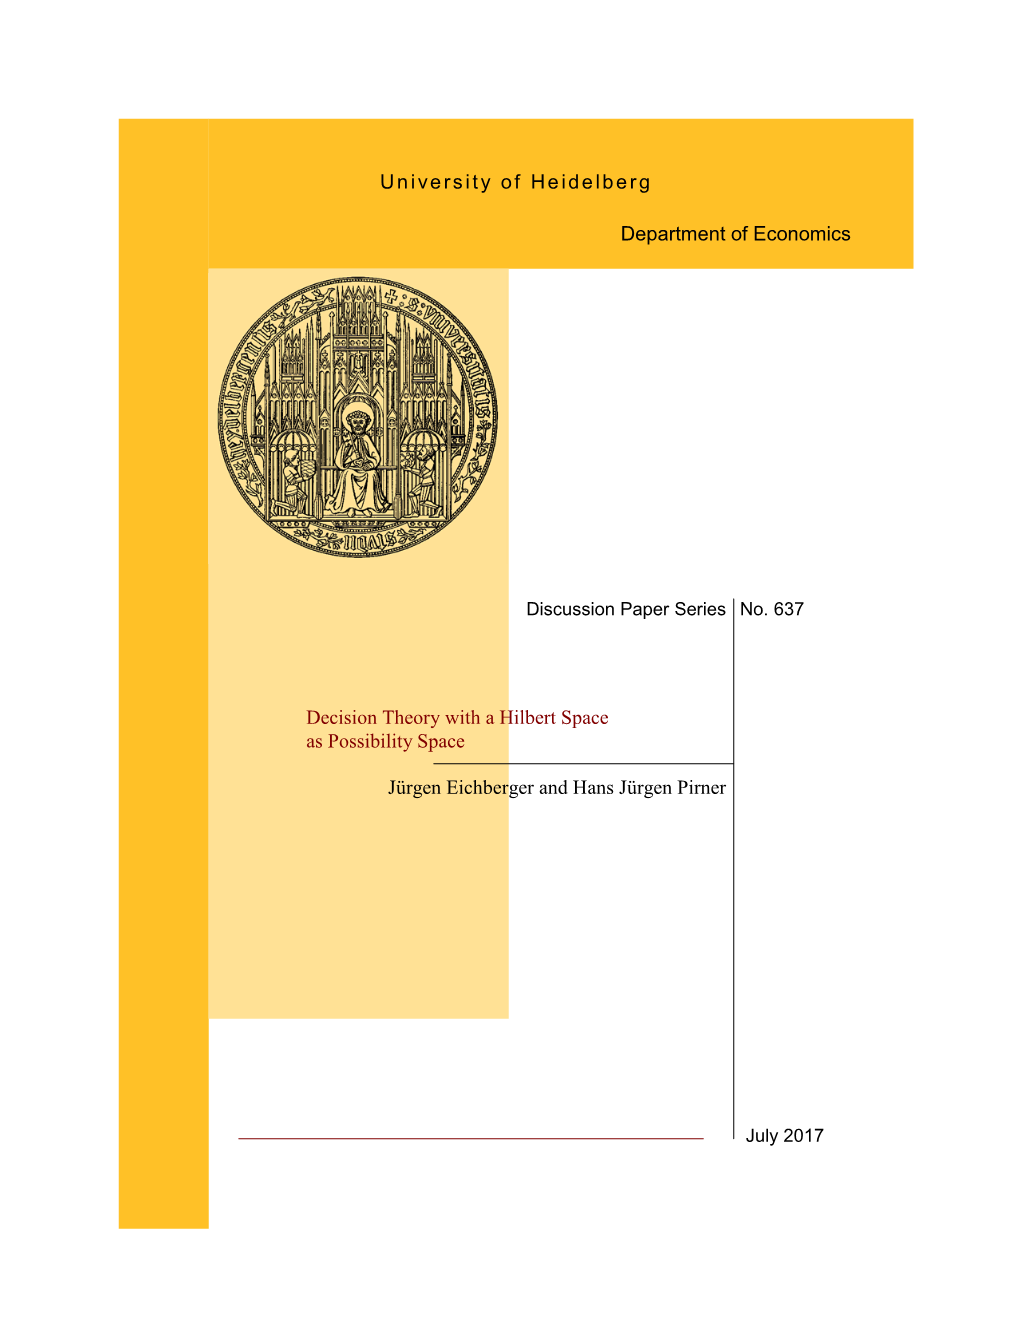 University of Heidelberg Department of Economics Decision Theory With